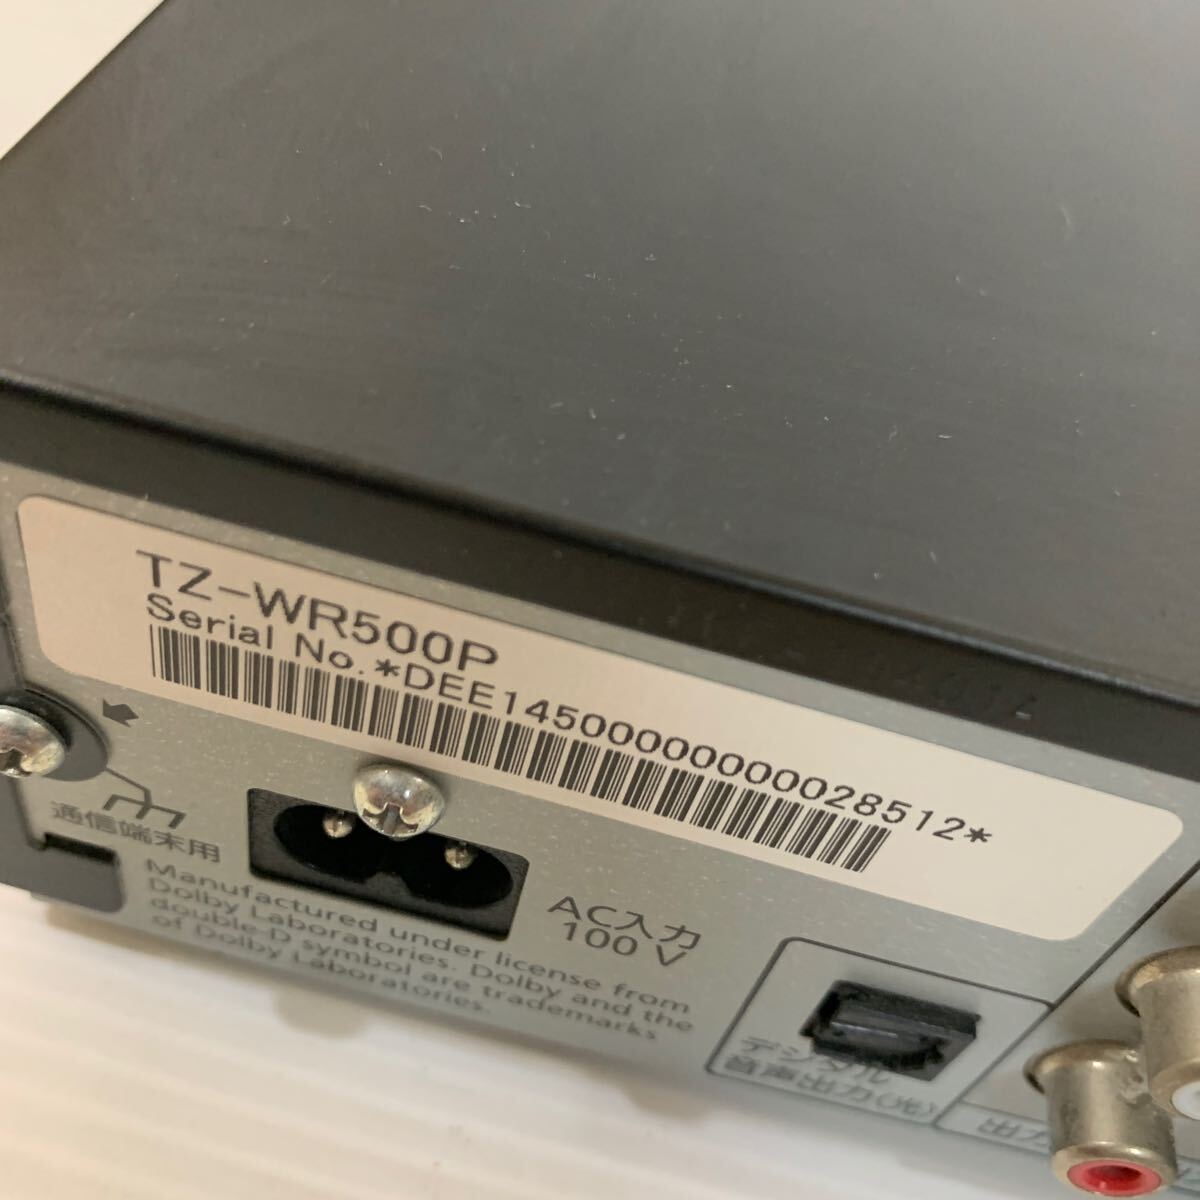 Panasonic Panasonic TZ-WR500Ps copper recorder HDD operation verification settled (04.13)